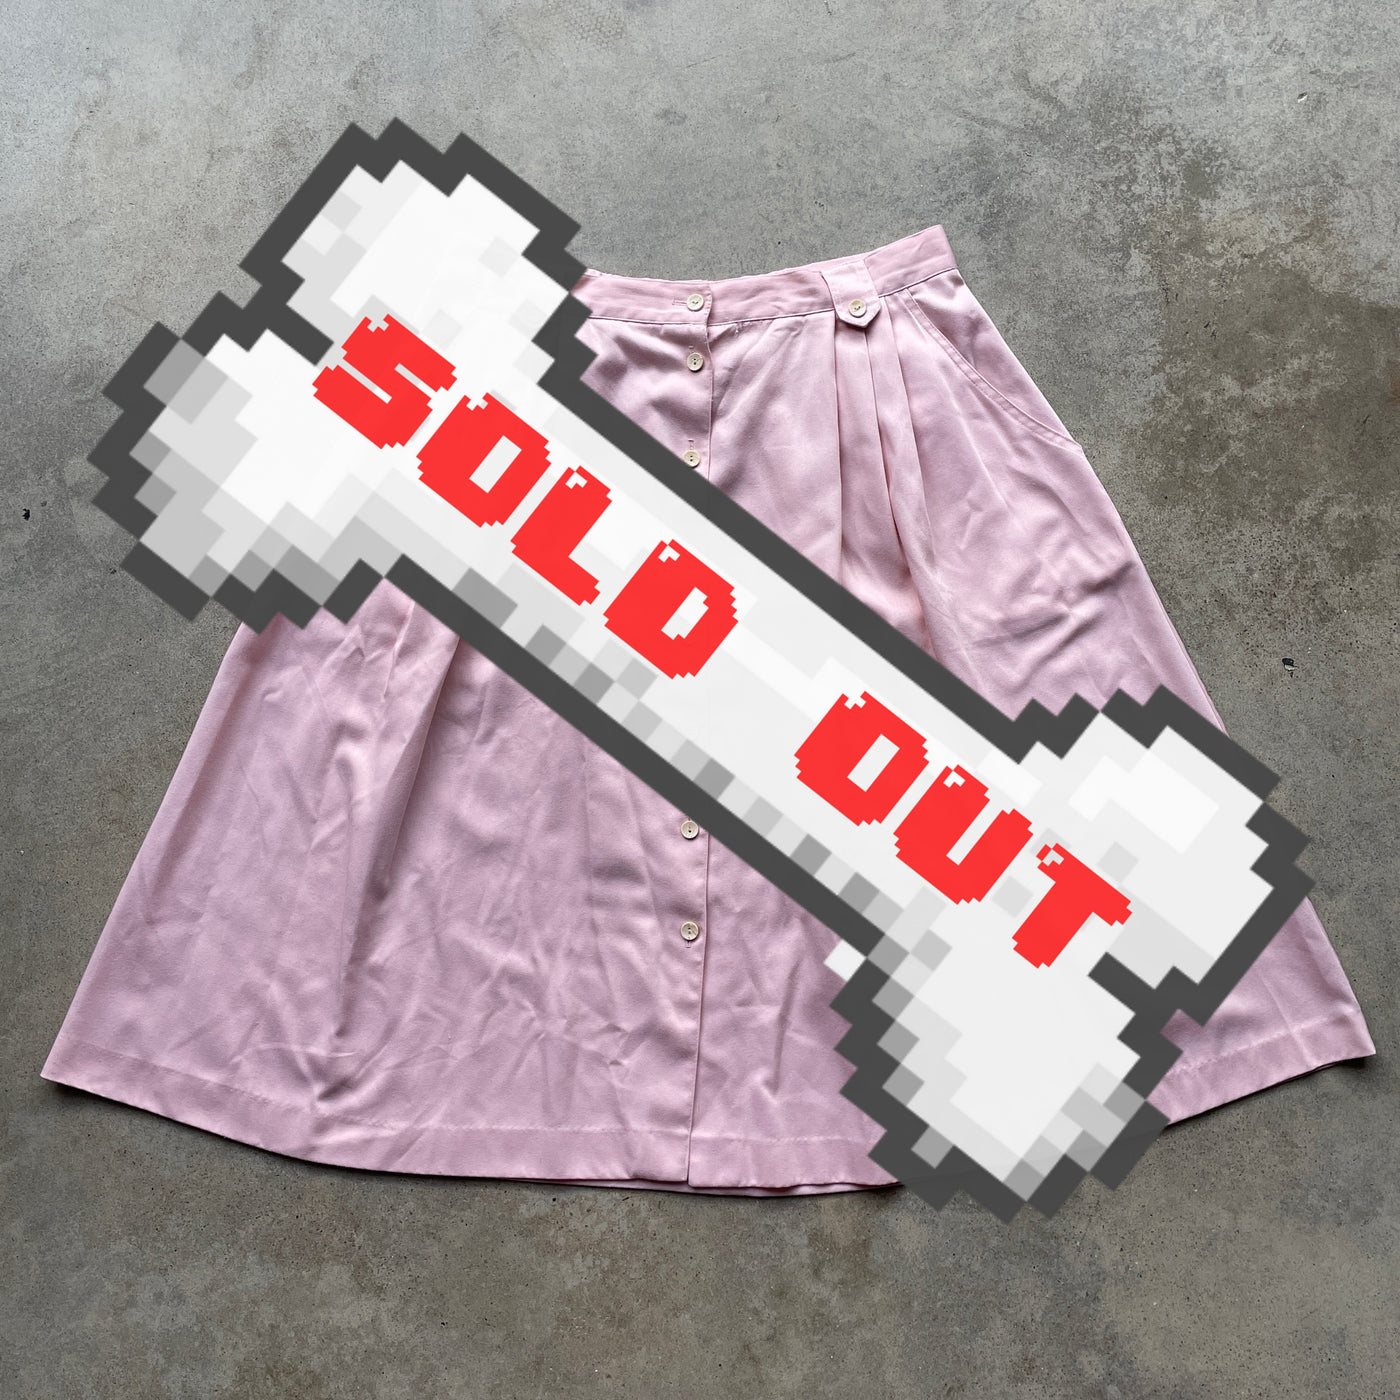 1980s Vintage Baby Pink “Koret” Buttonet Circle Skirt